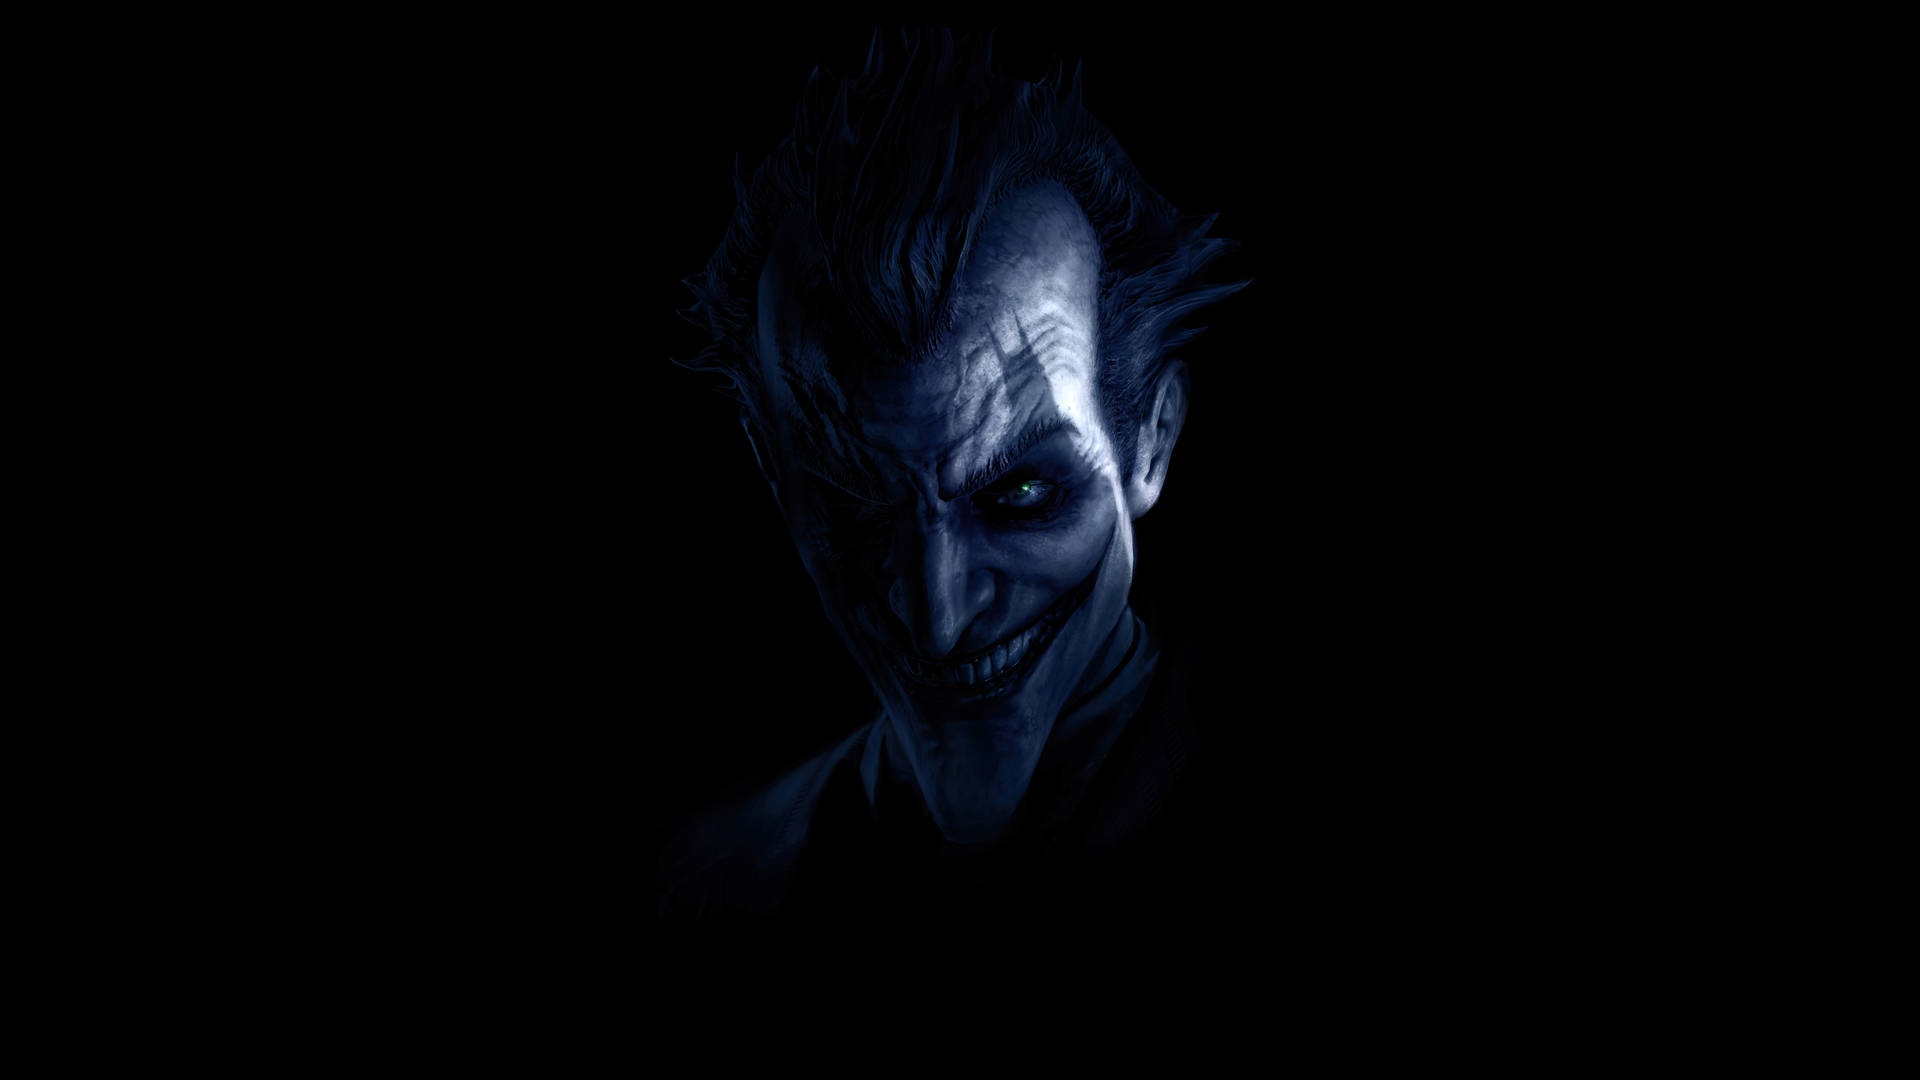 Sinister Black Ultra Hd Joker Smiling Background